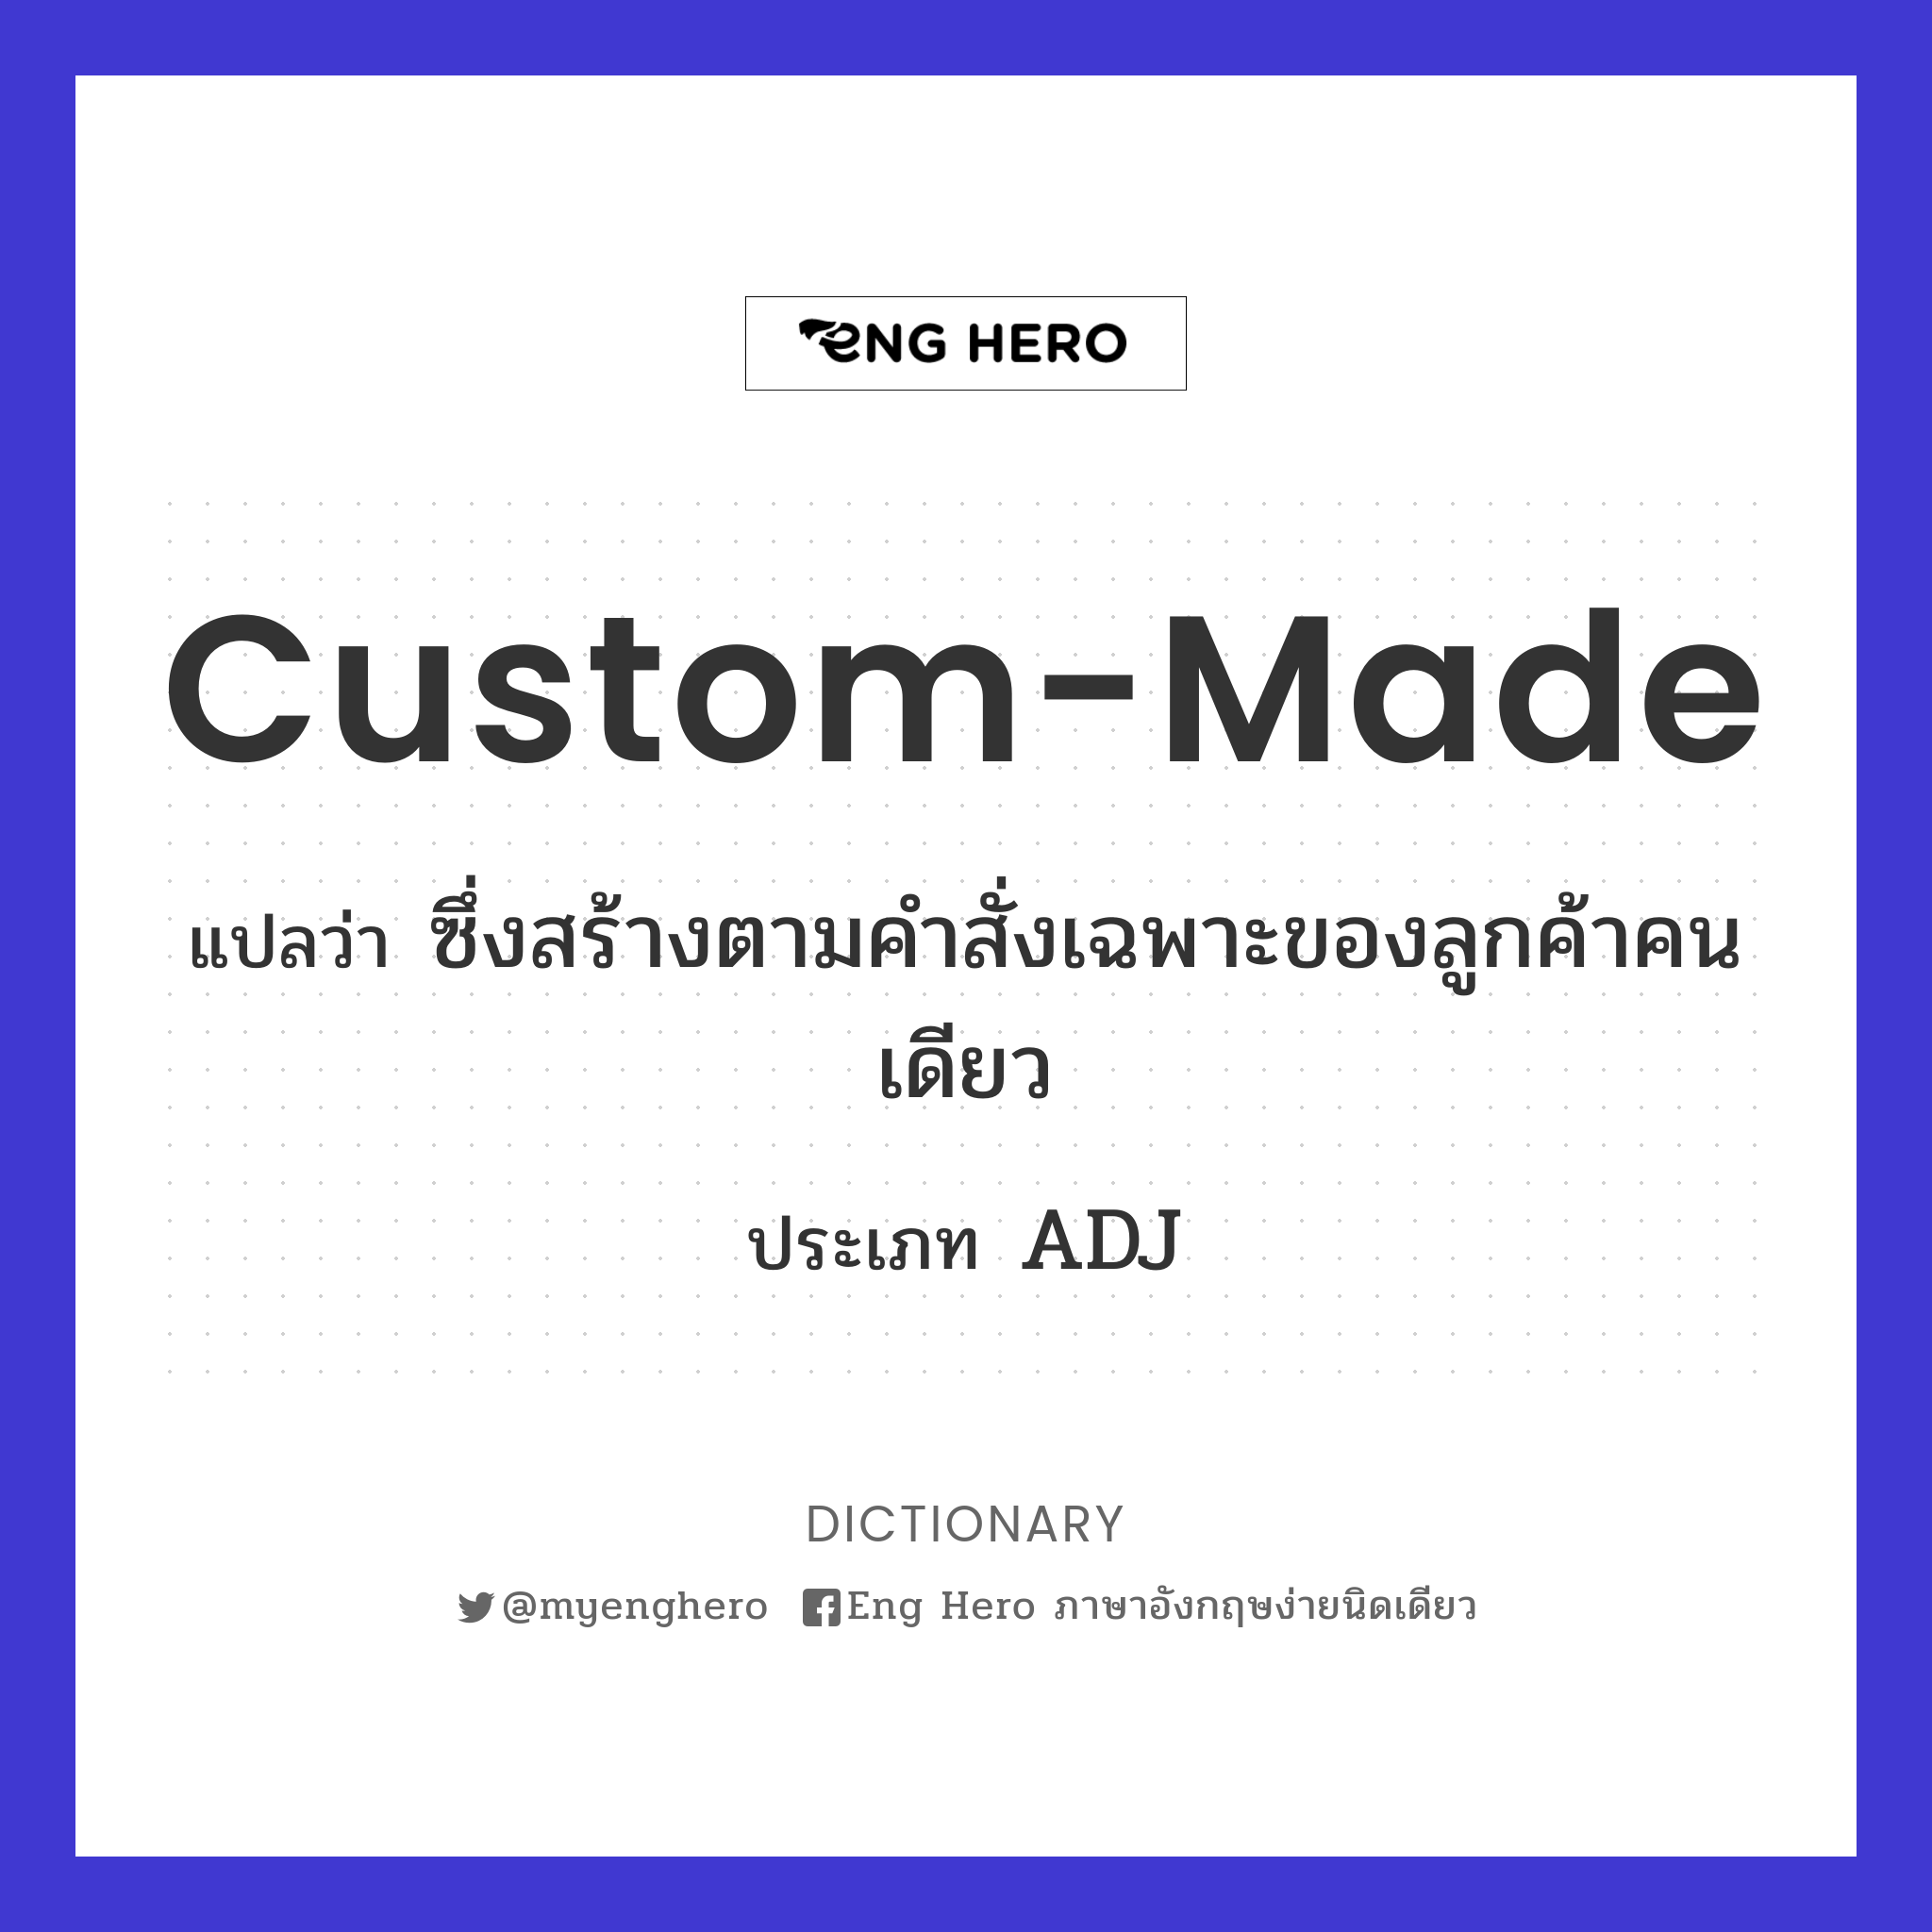 custom-made